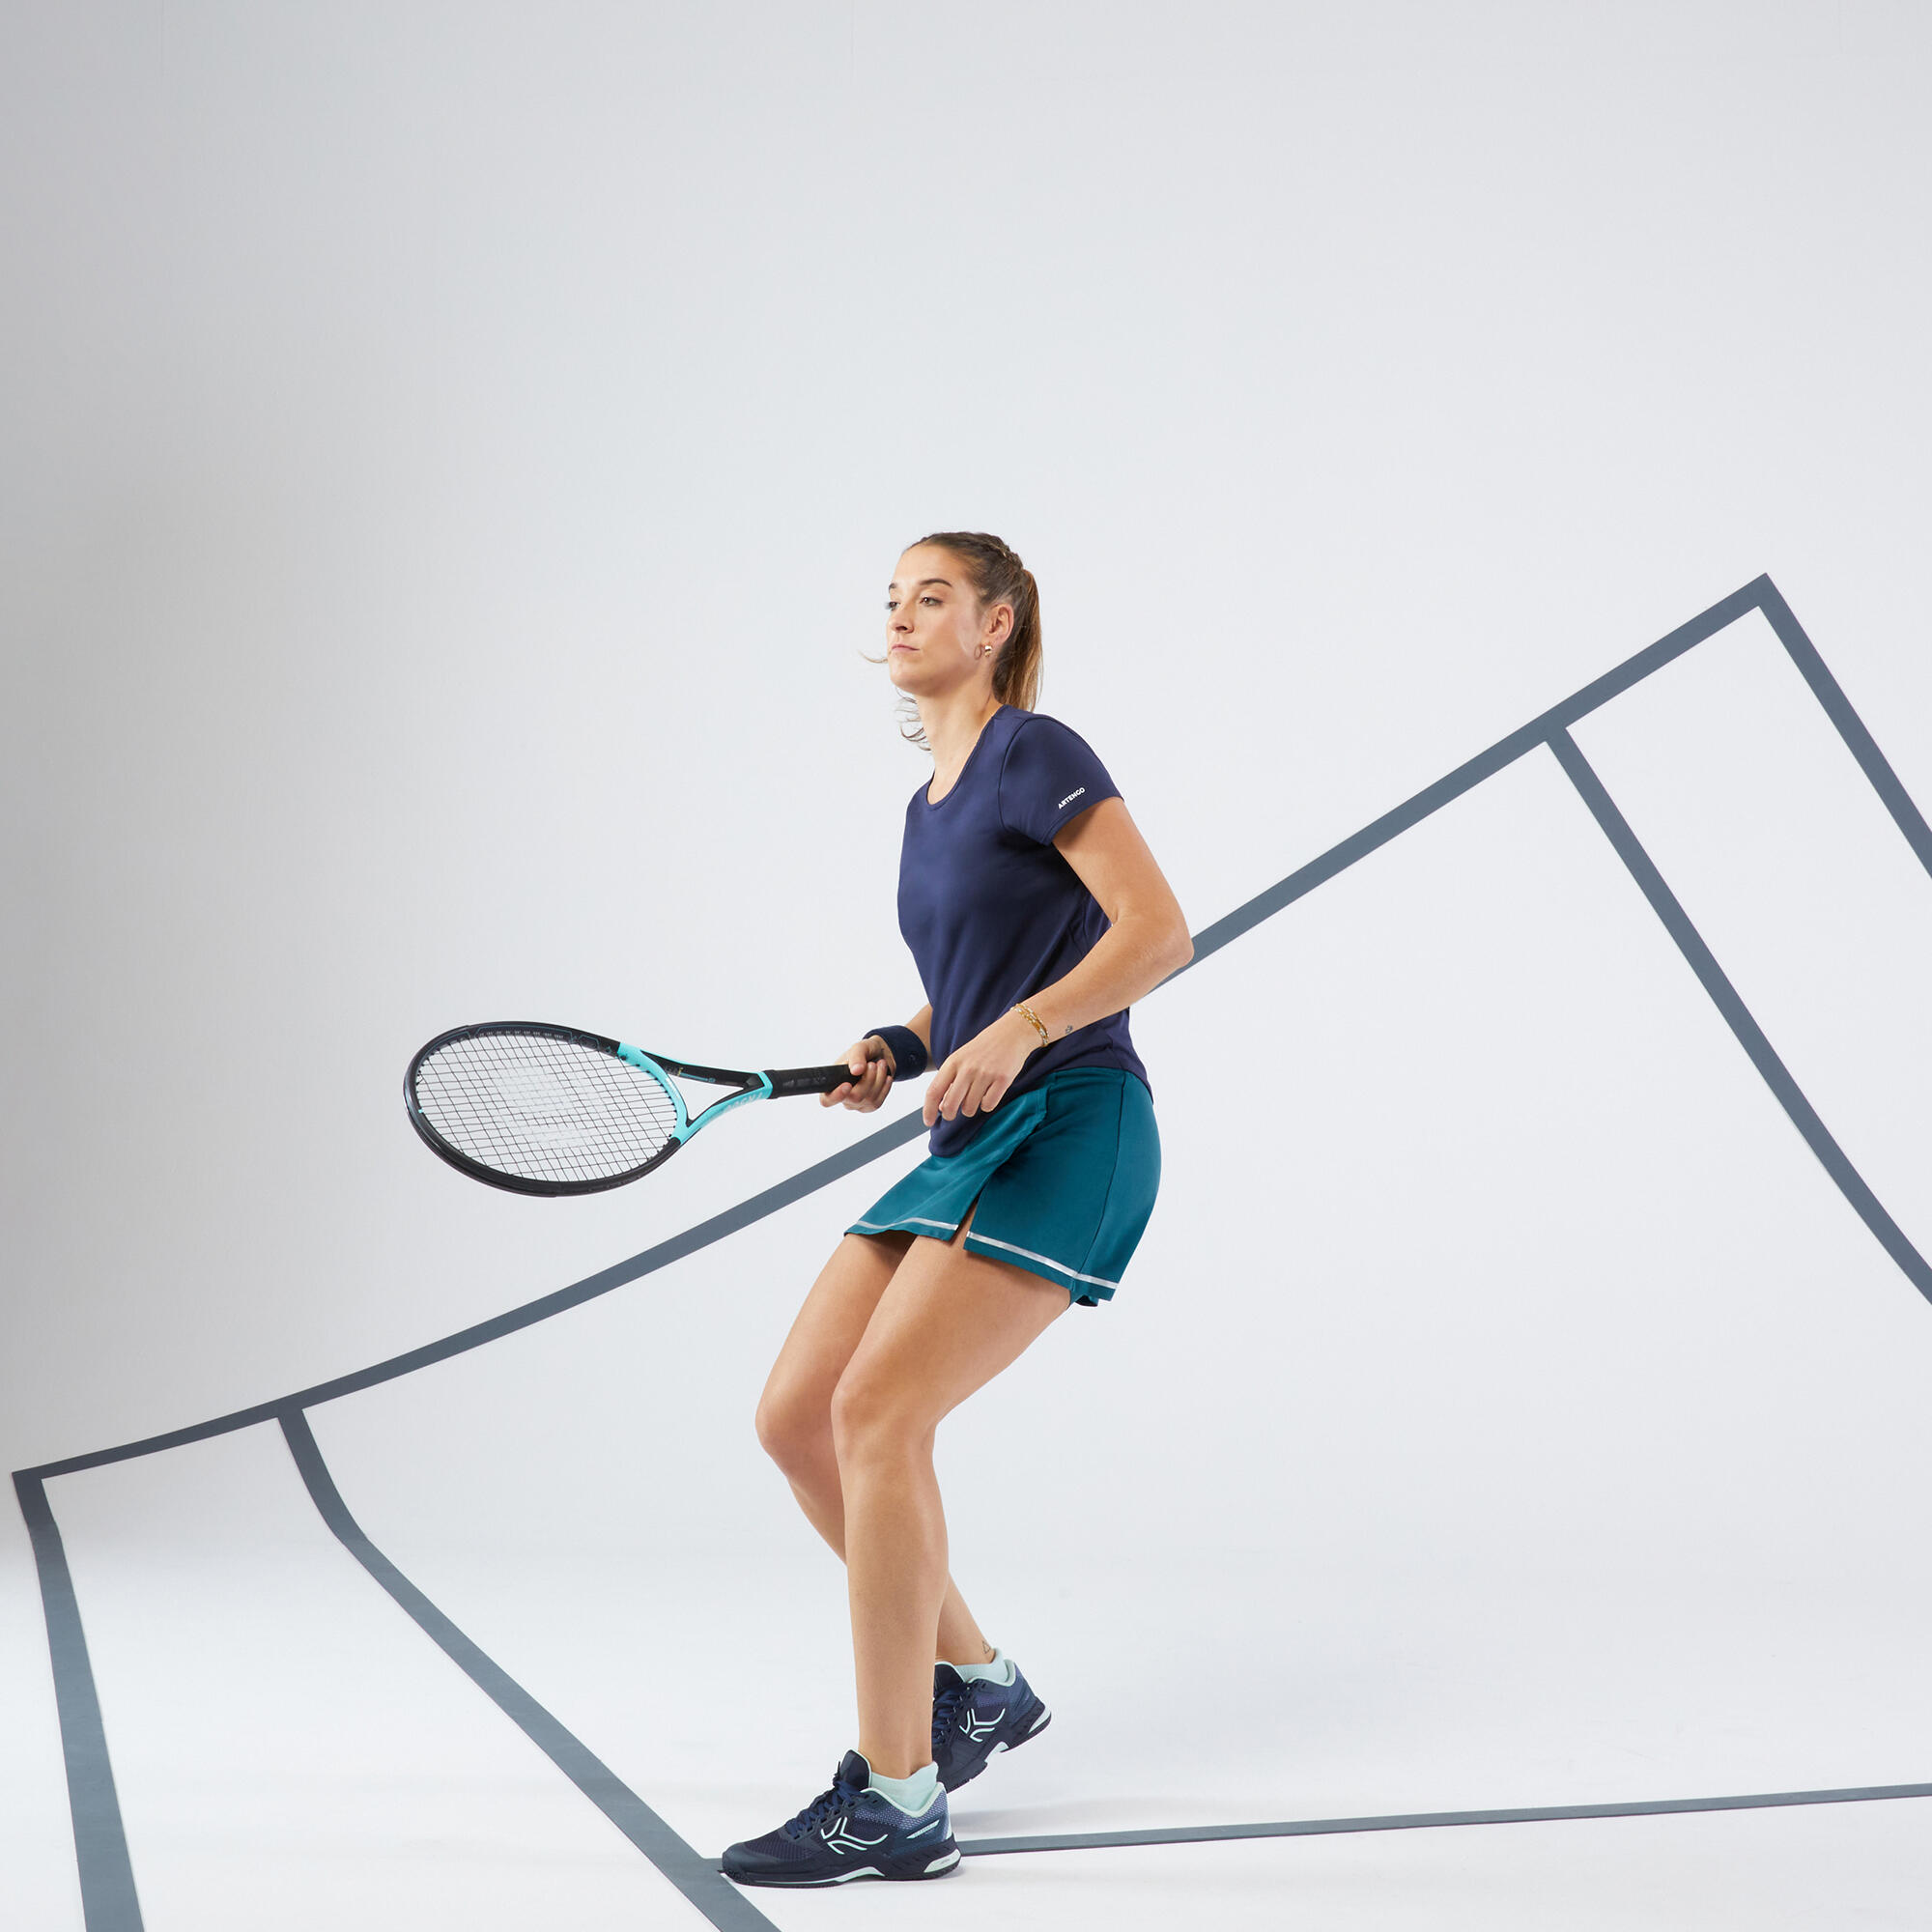 Women's Soft Tennis Skirt Dry 500 - Deep Turquoise 2/5